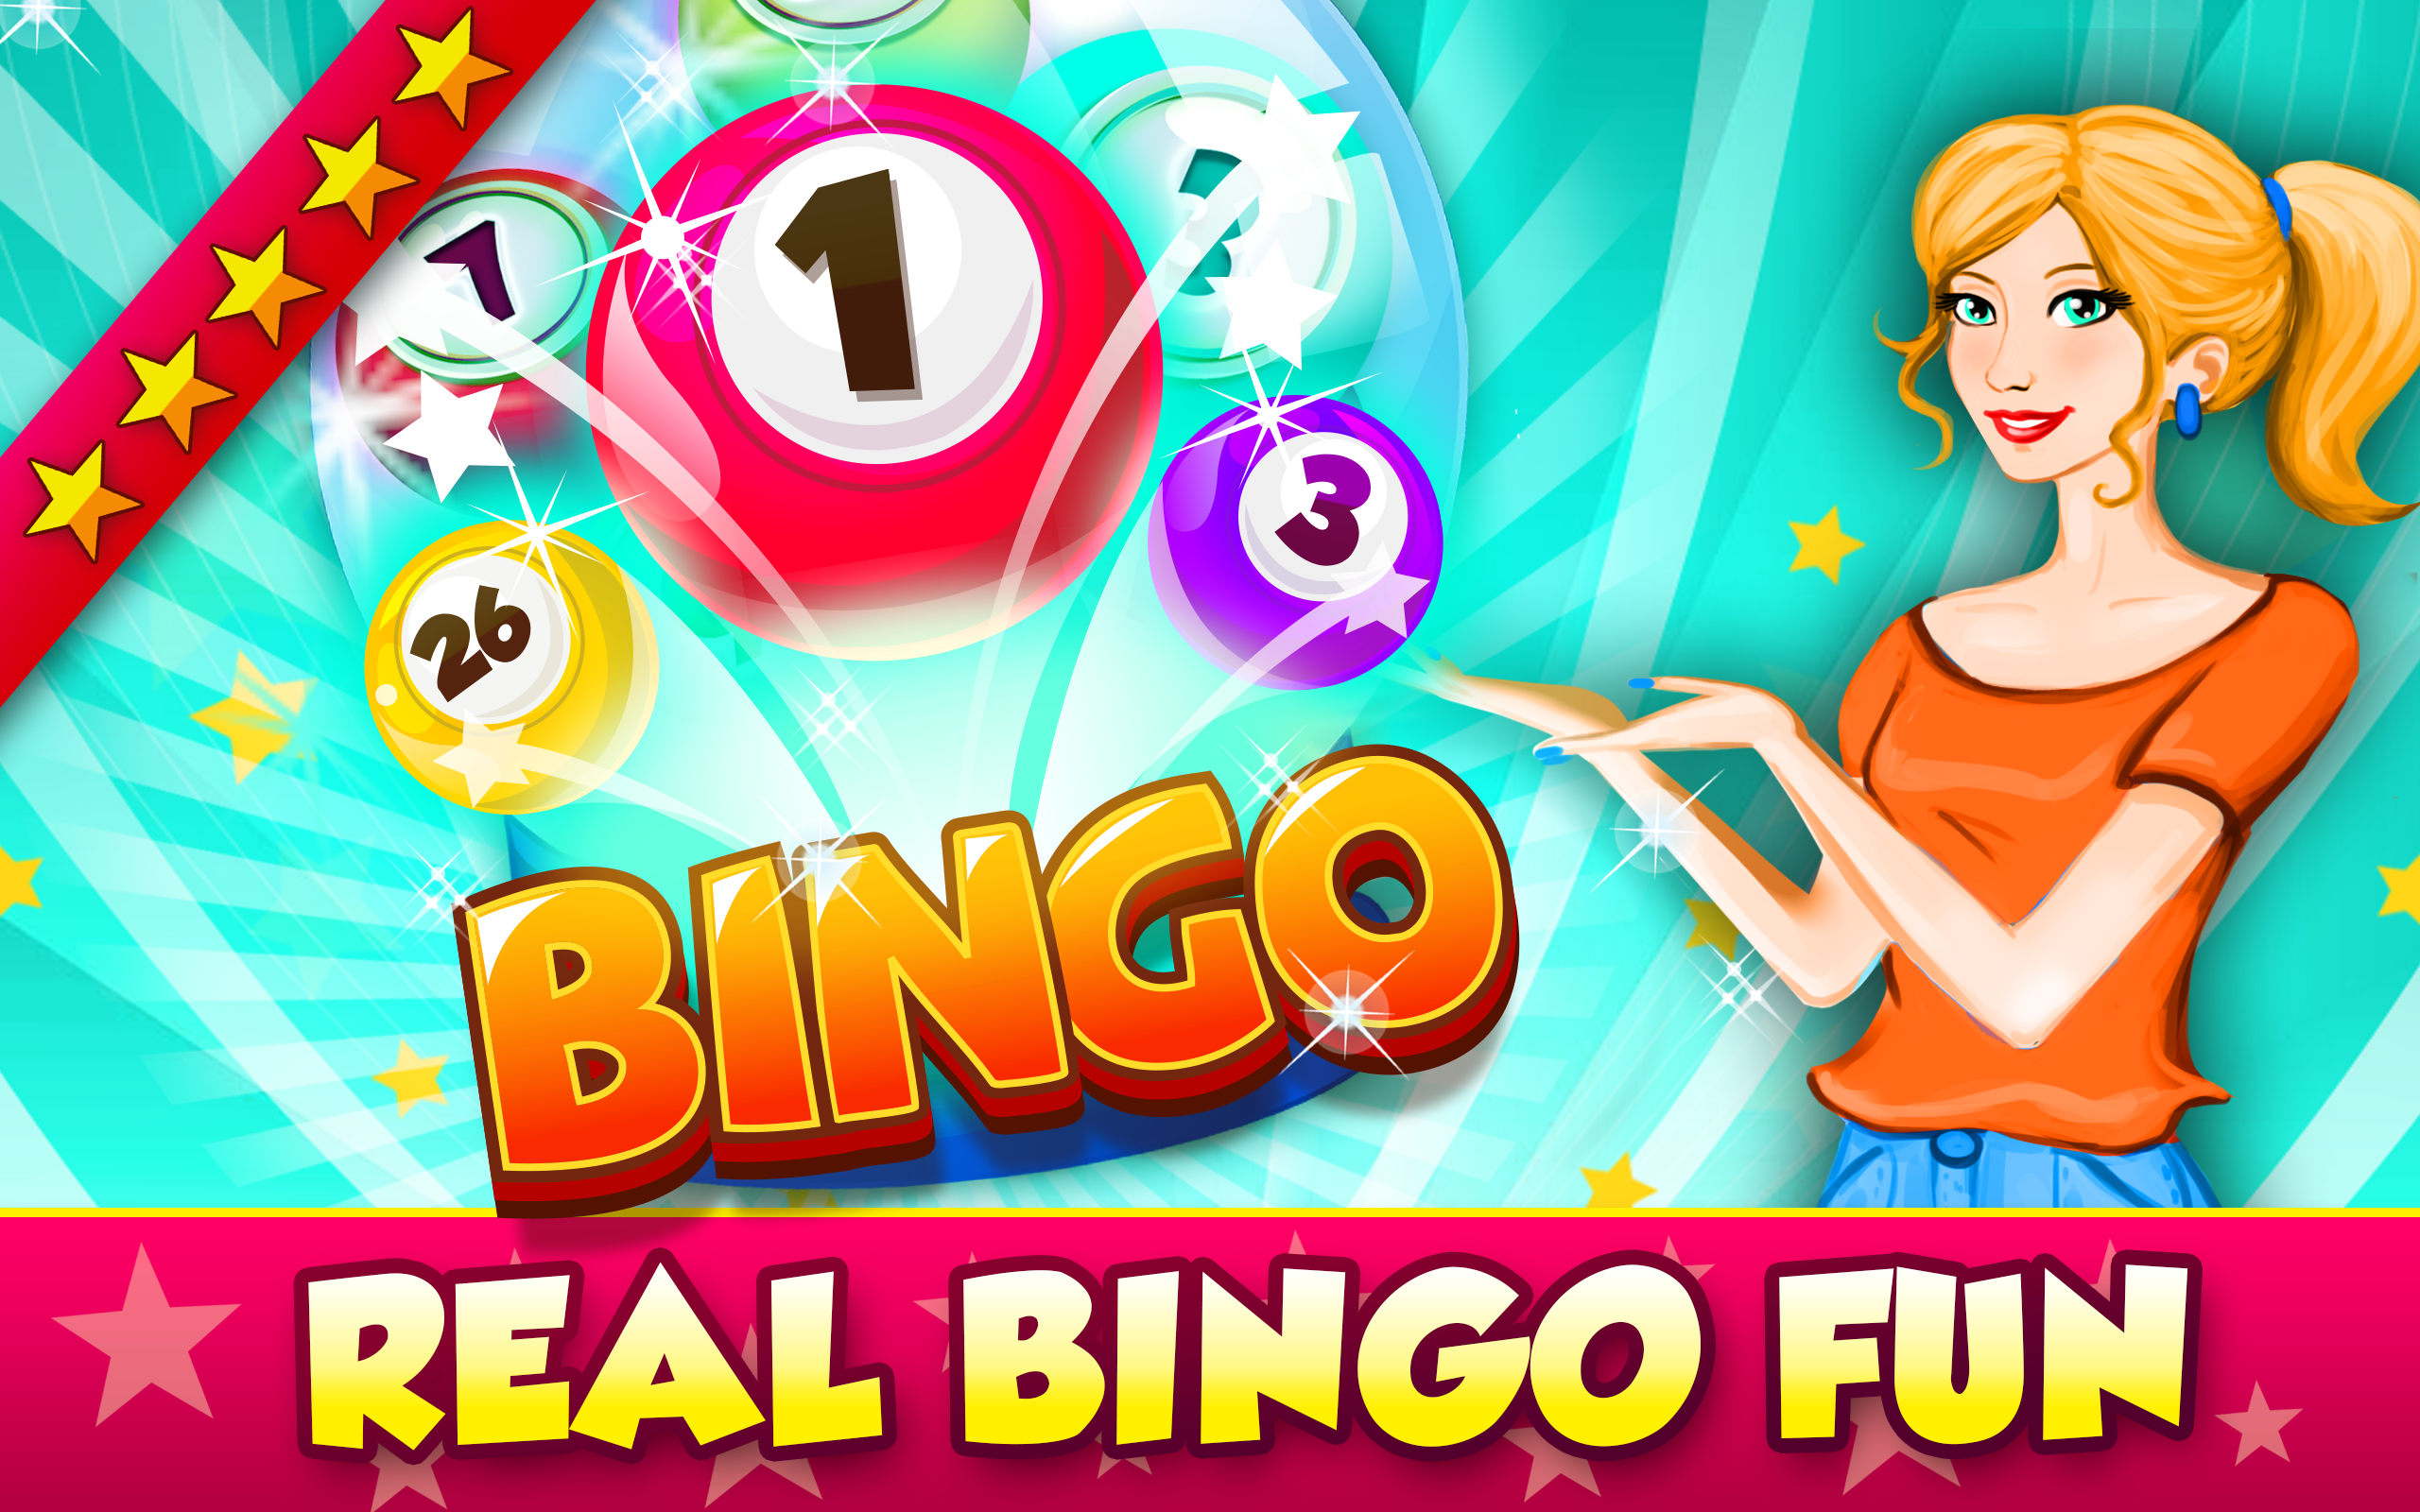 Play free online bingo games for fun